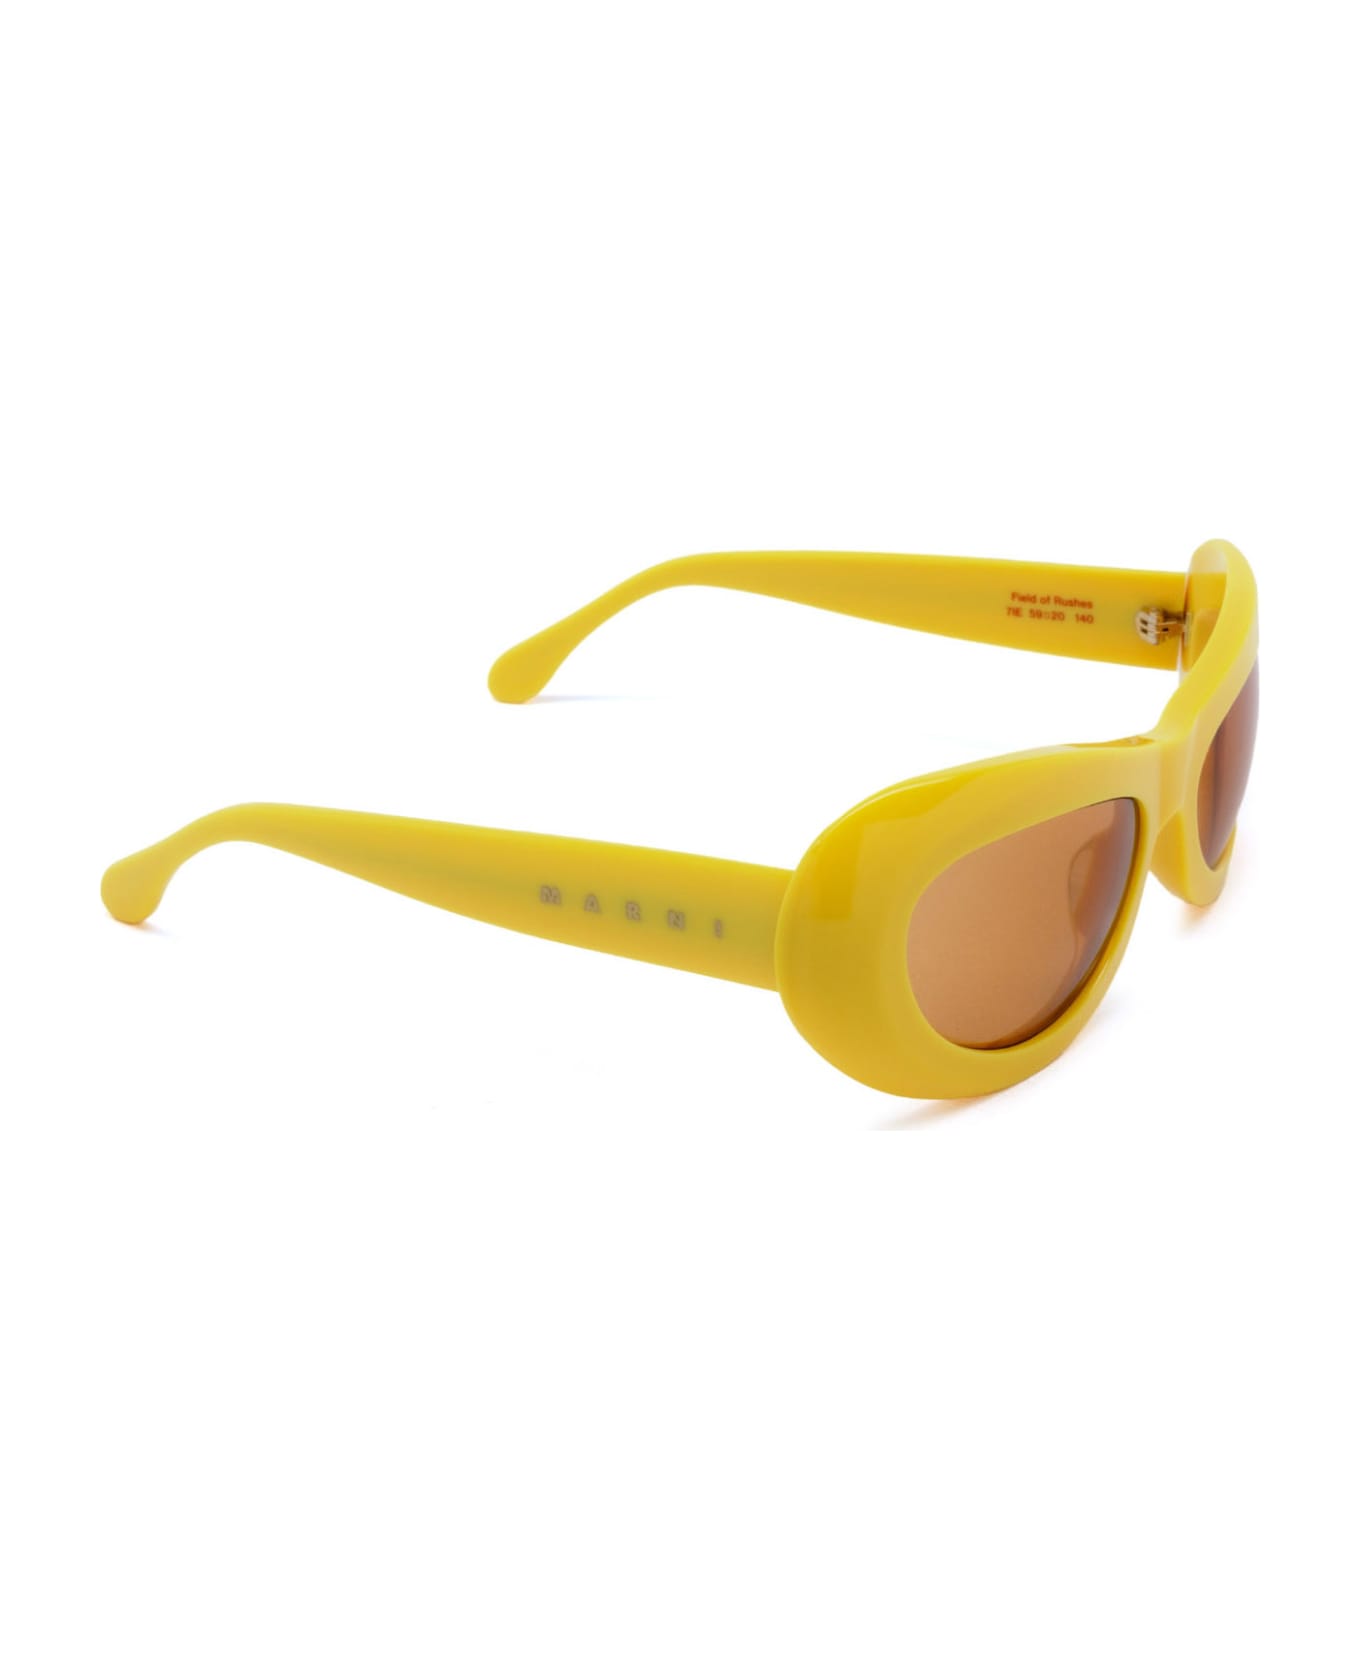 Marni Eyewear Field Of Rushes Yellow Sunglasses - Yellow サングラス